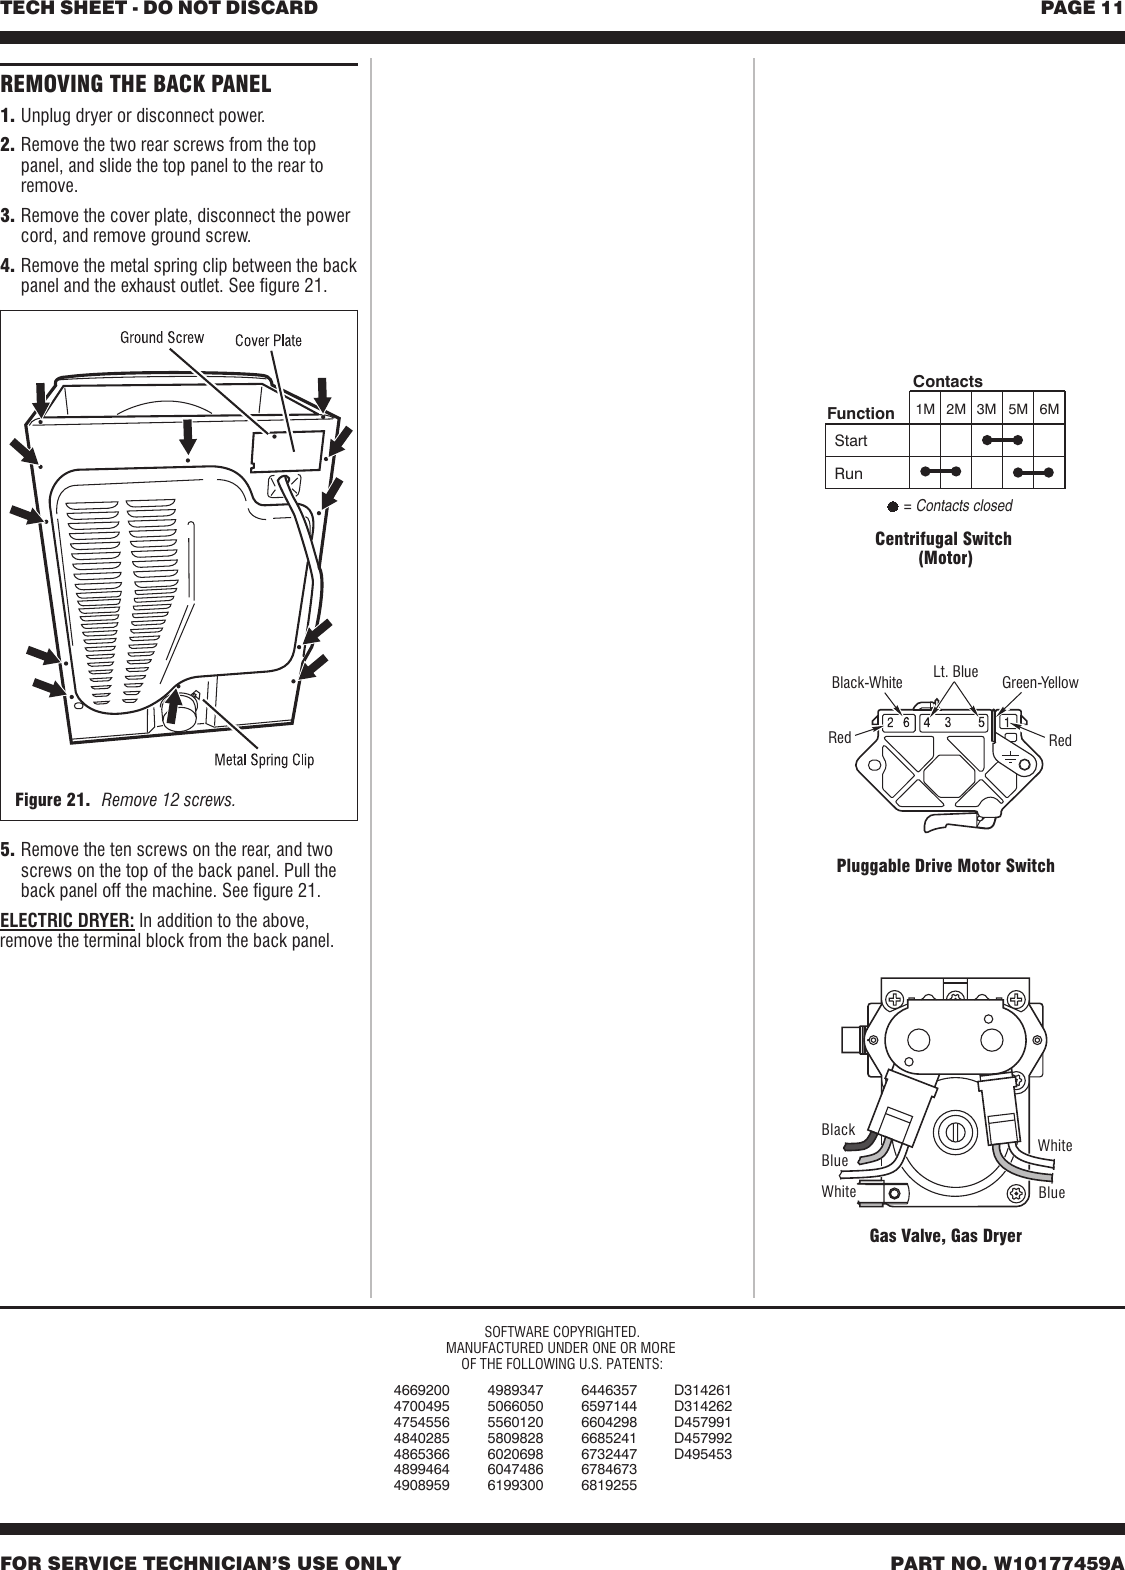 Page 11 of 12 - ZB80281_W10177459A.vp  W10177459A - Whirlpool Duet Sport Dryer Tech Sheet